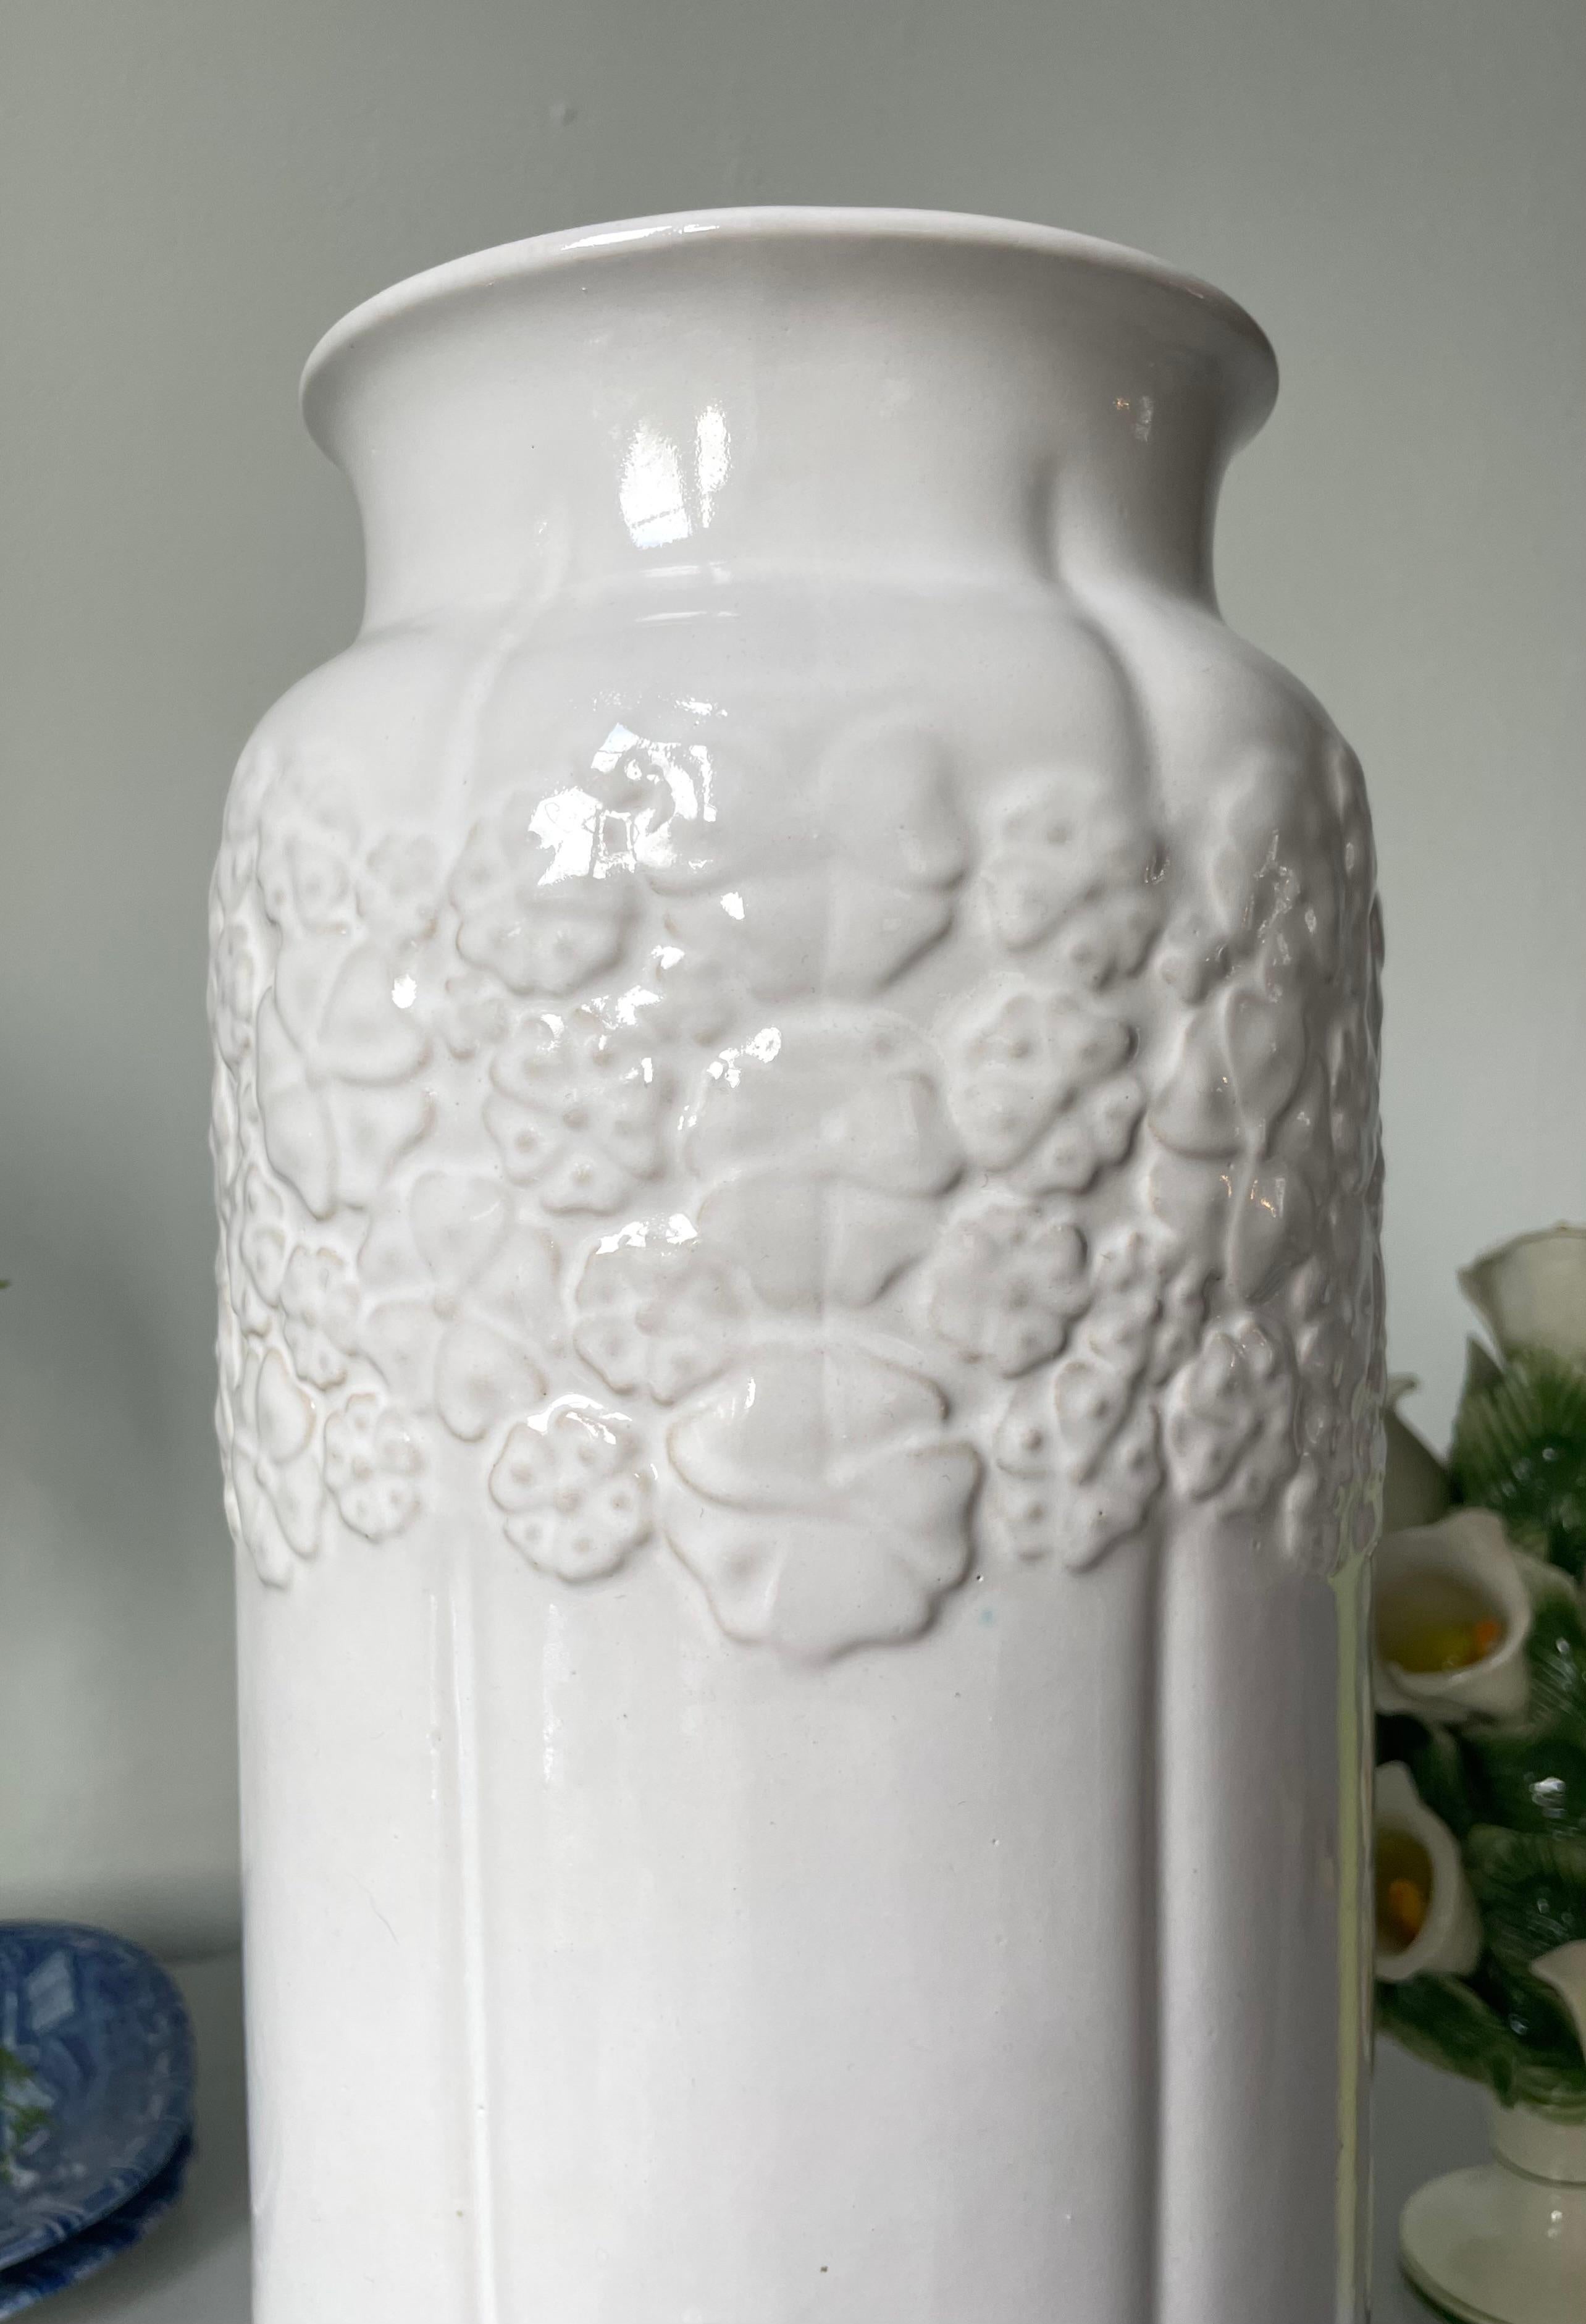 Bay Keramik Tall White Modernist Floor Vase With Organic Decor, 1970s In Good Condition For Sale In Copenhagen, DK